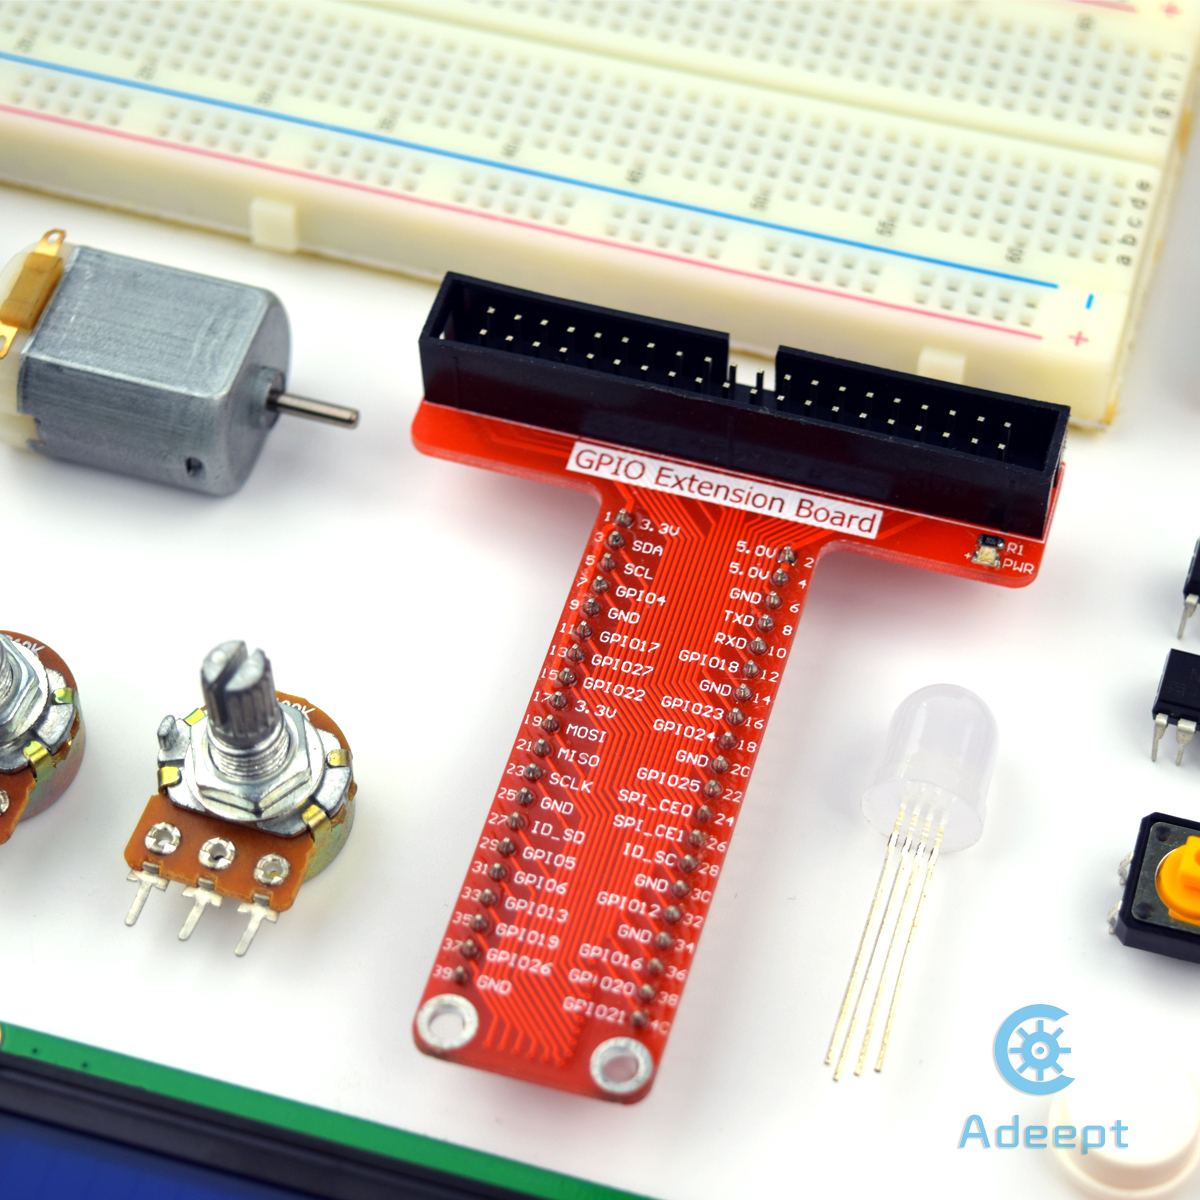 Adeept Super Starter Kit for Raspberry Pi - Click to Enlarge